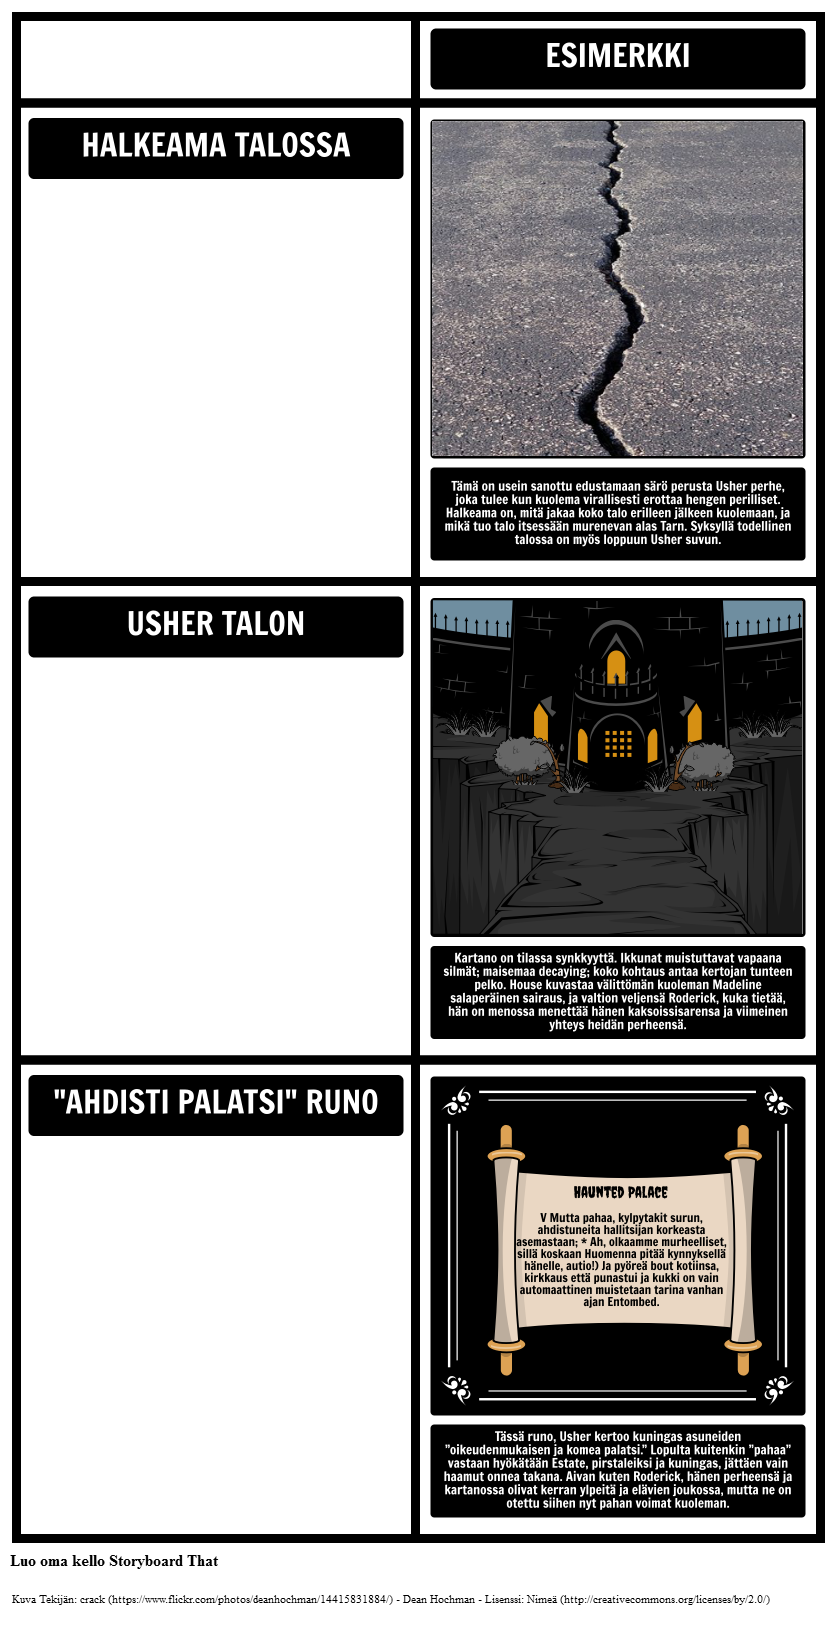 Fall of House of Usher Teemat, Kuviot, ja Symbolit